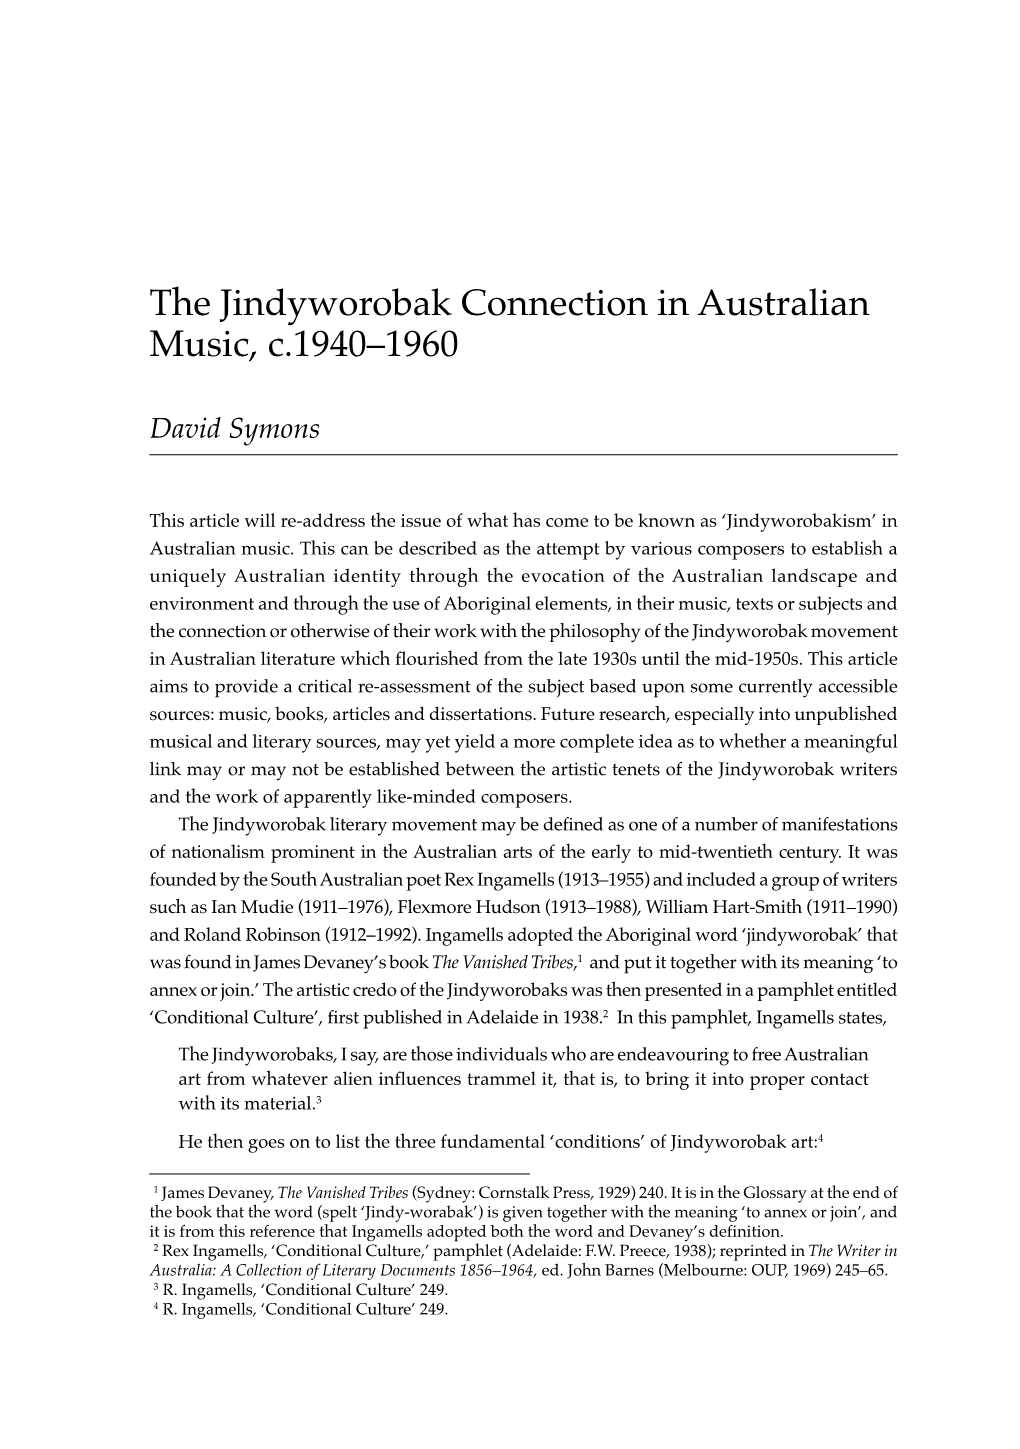 The Jindyworobak Connection in Australian Music, C.1940–1960